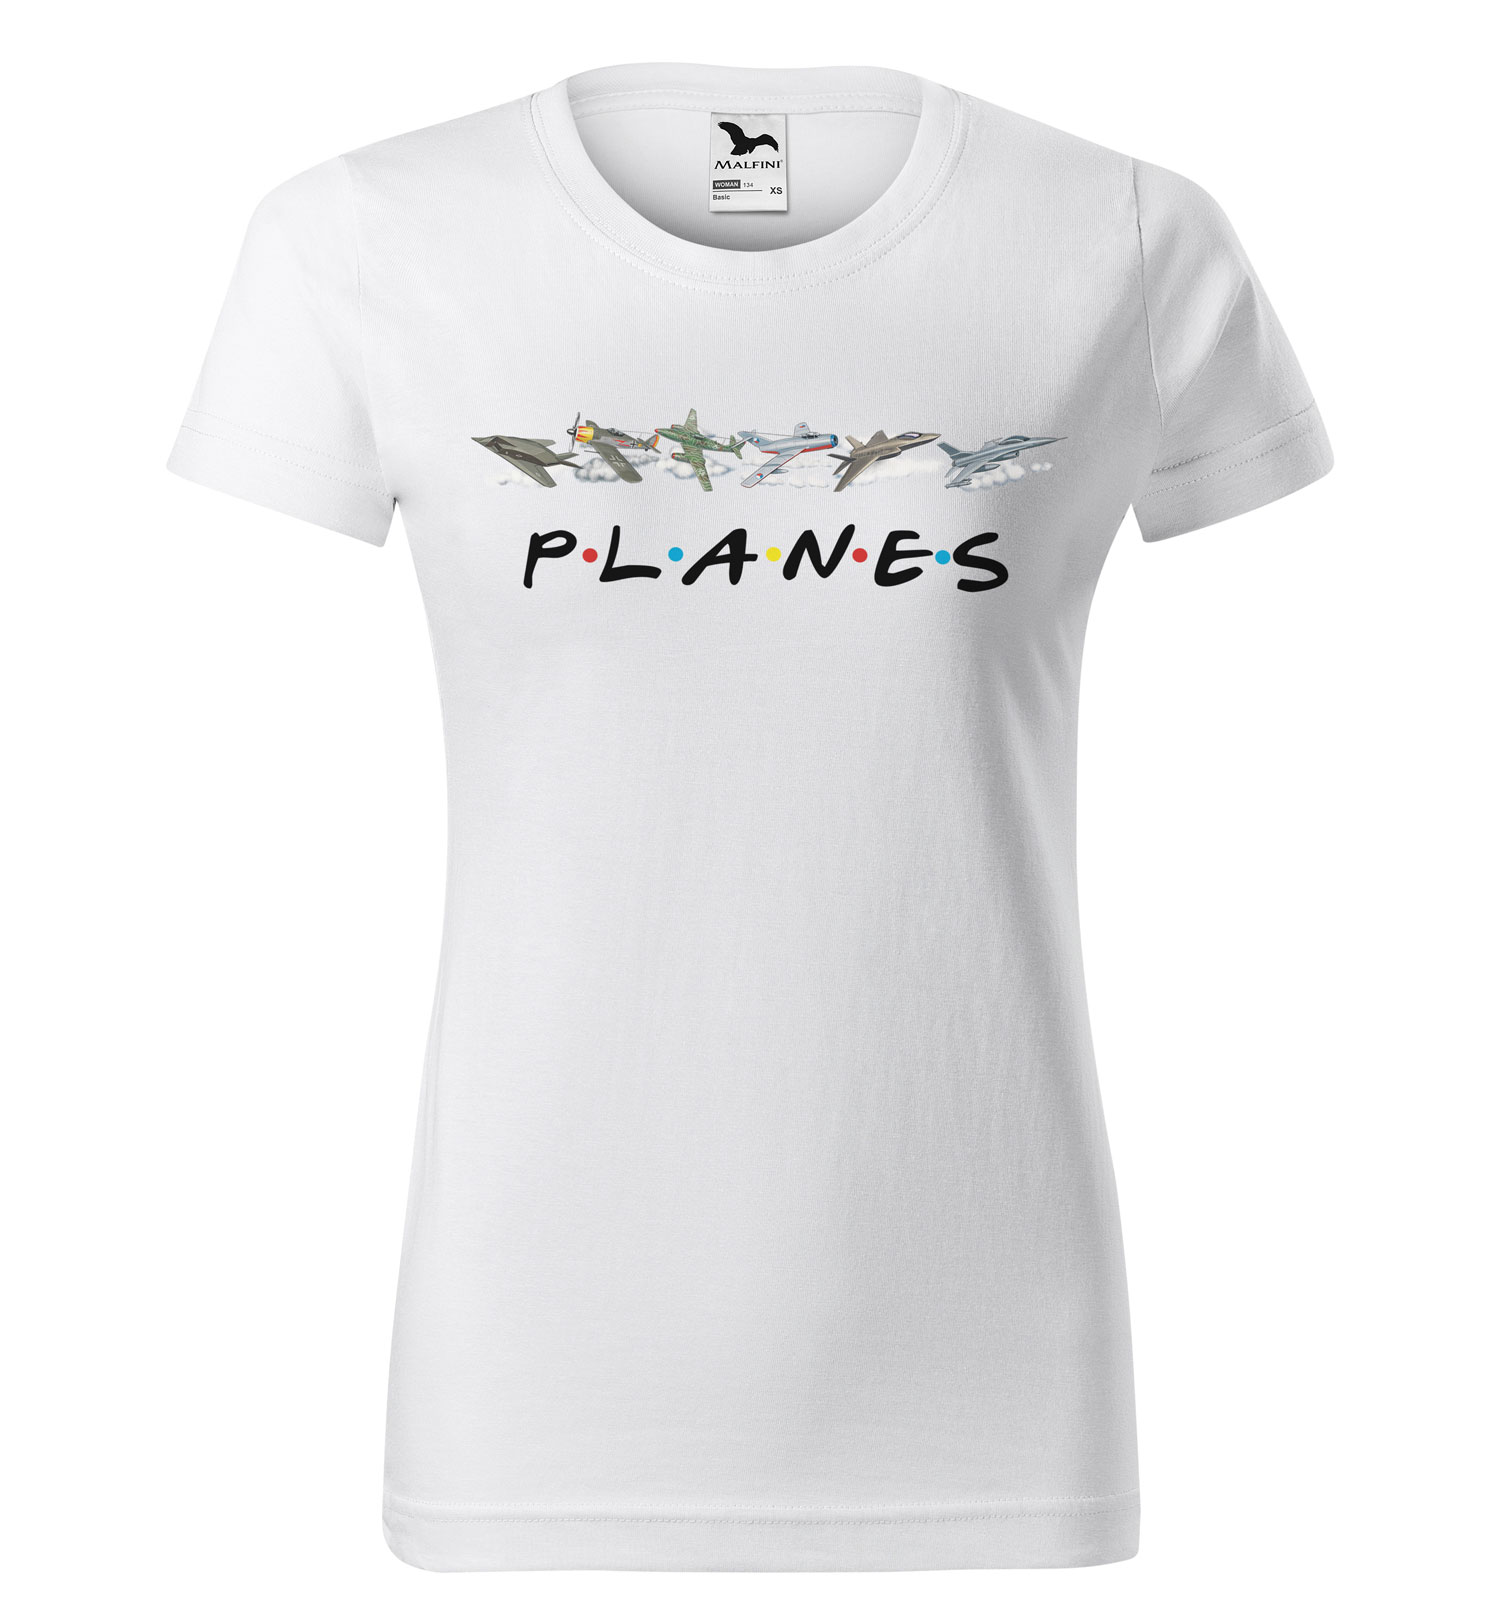 Tričko Planes (Velikost: 2XL, Typ: pro ženy, Barva trička: Bílá)